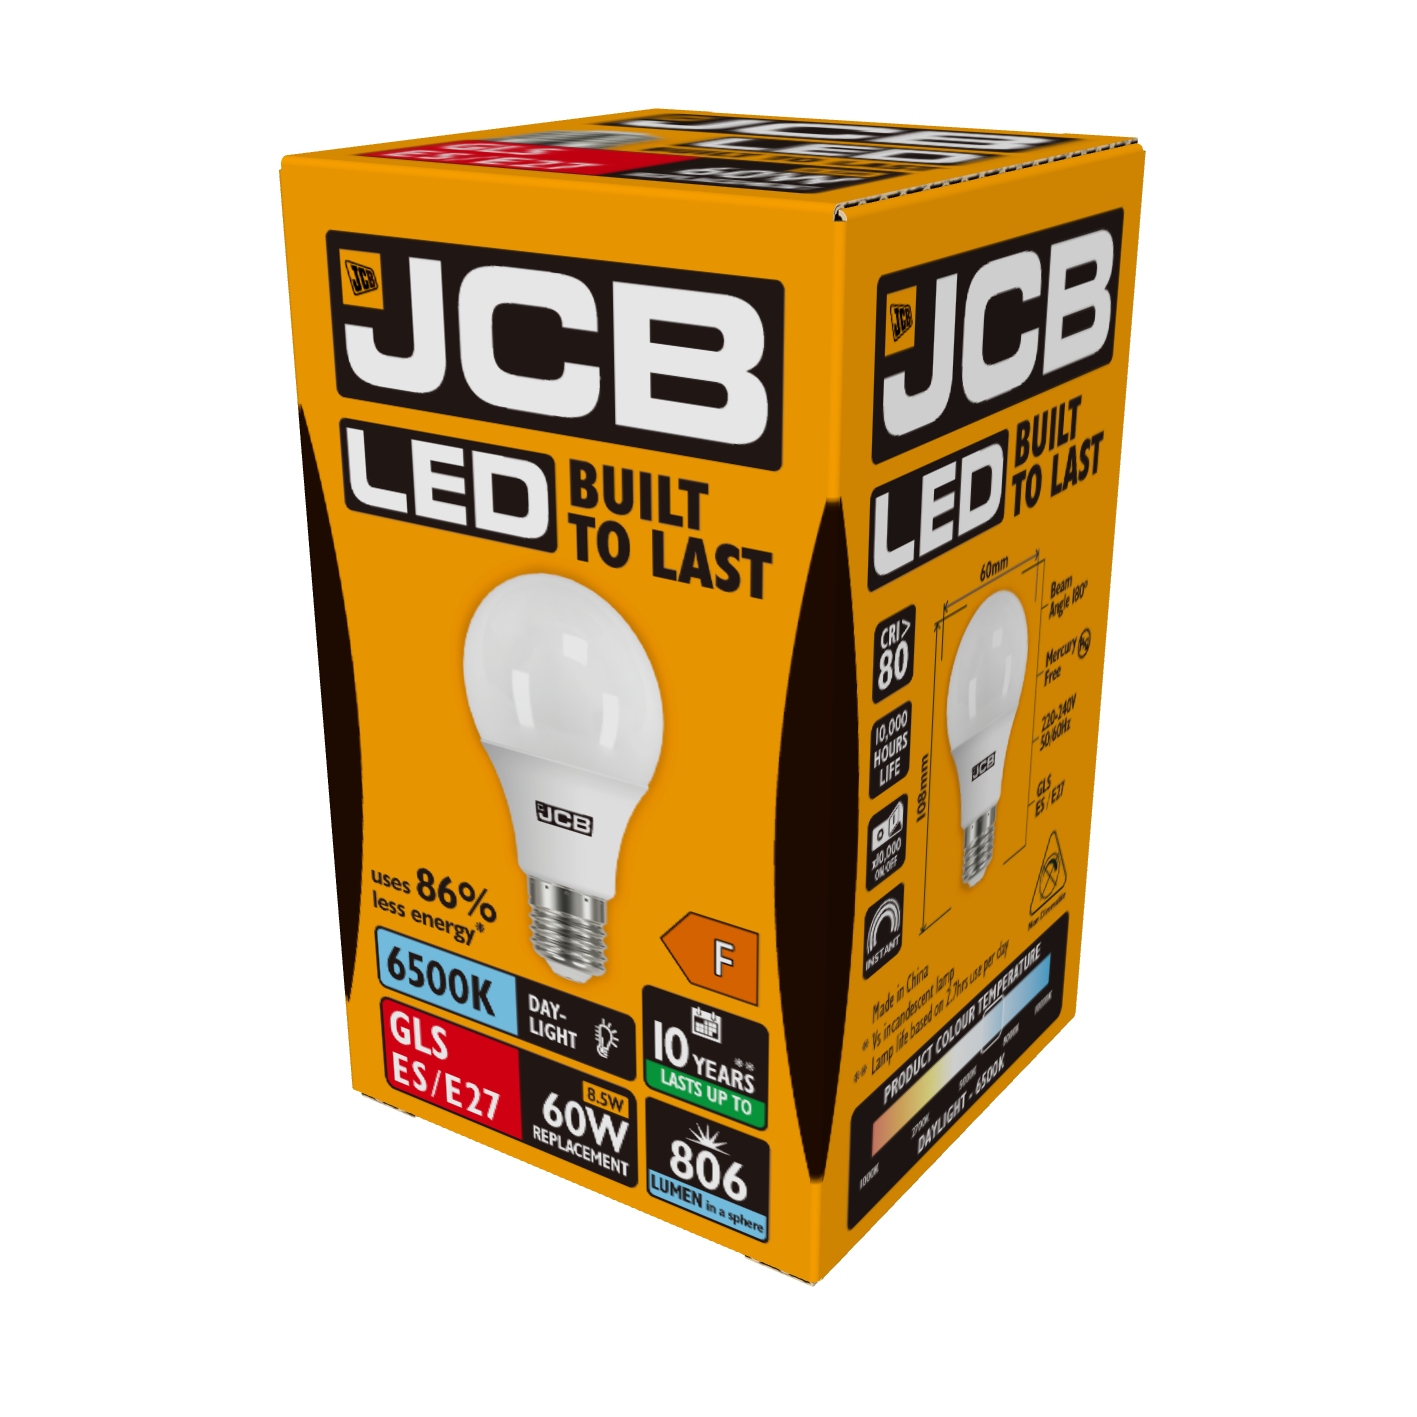 JCB LED GLS E27 (ES) 806lm 8.5W 6,500K (Daylight), Box of 1